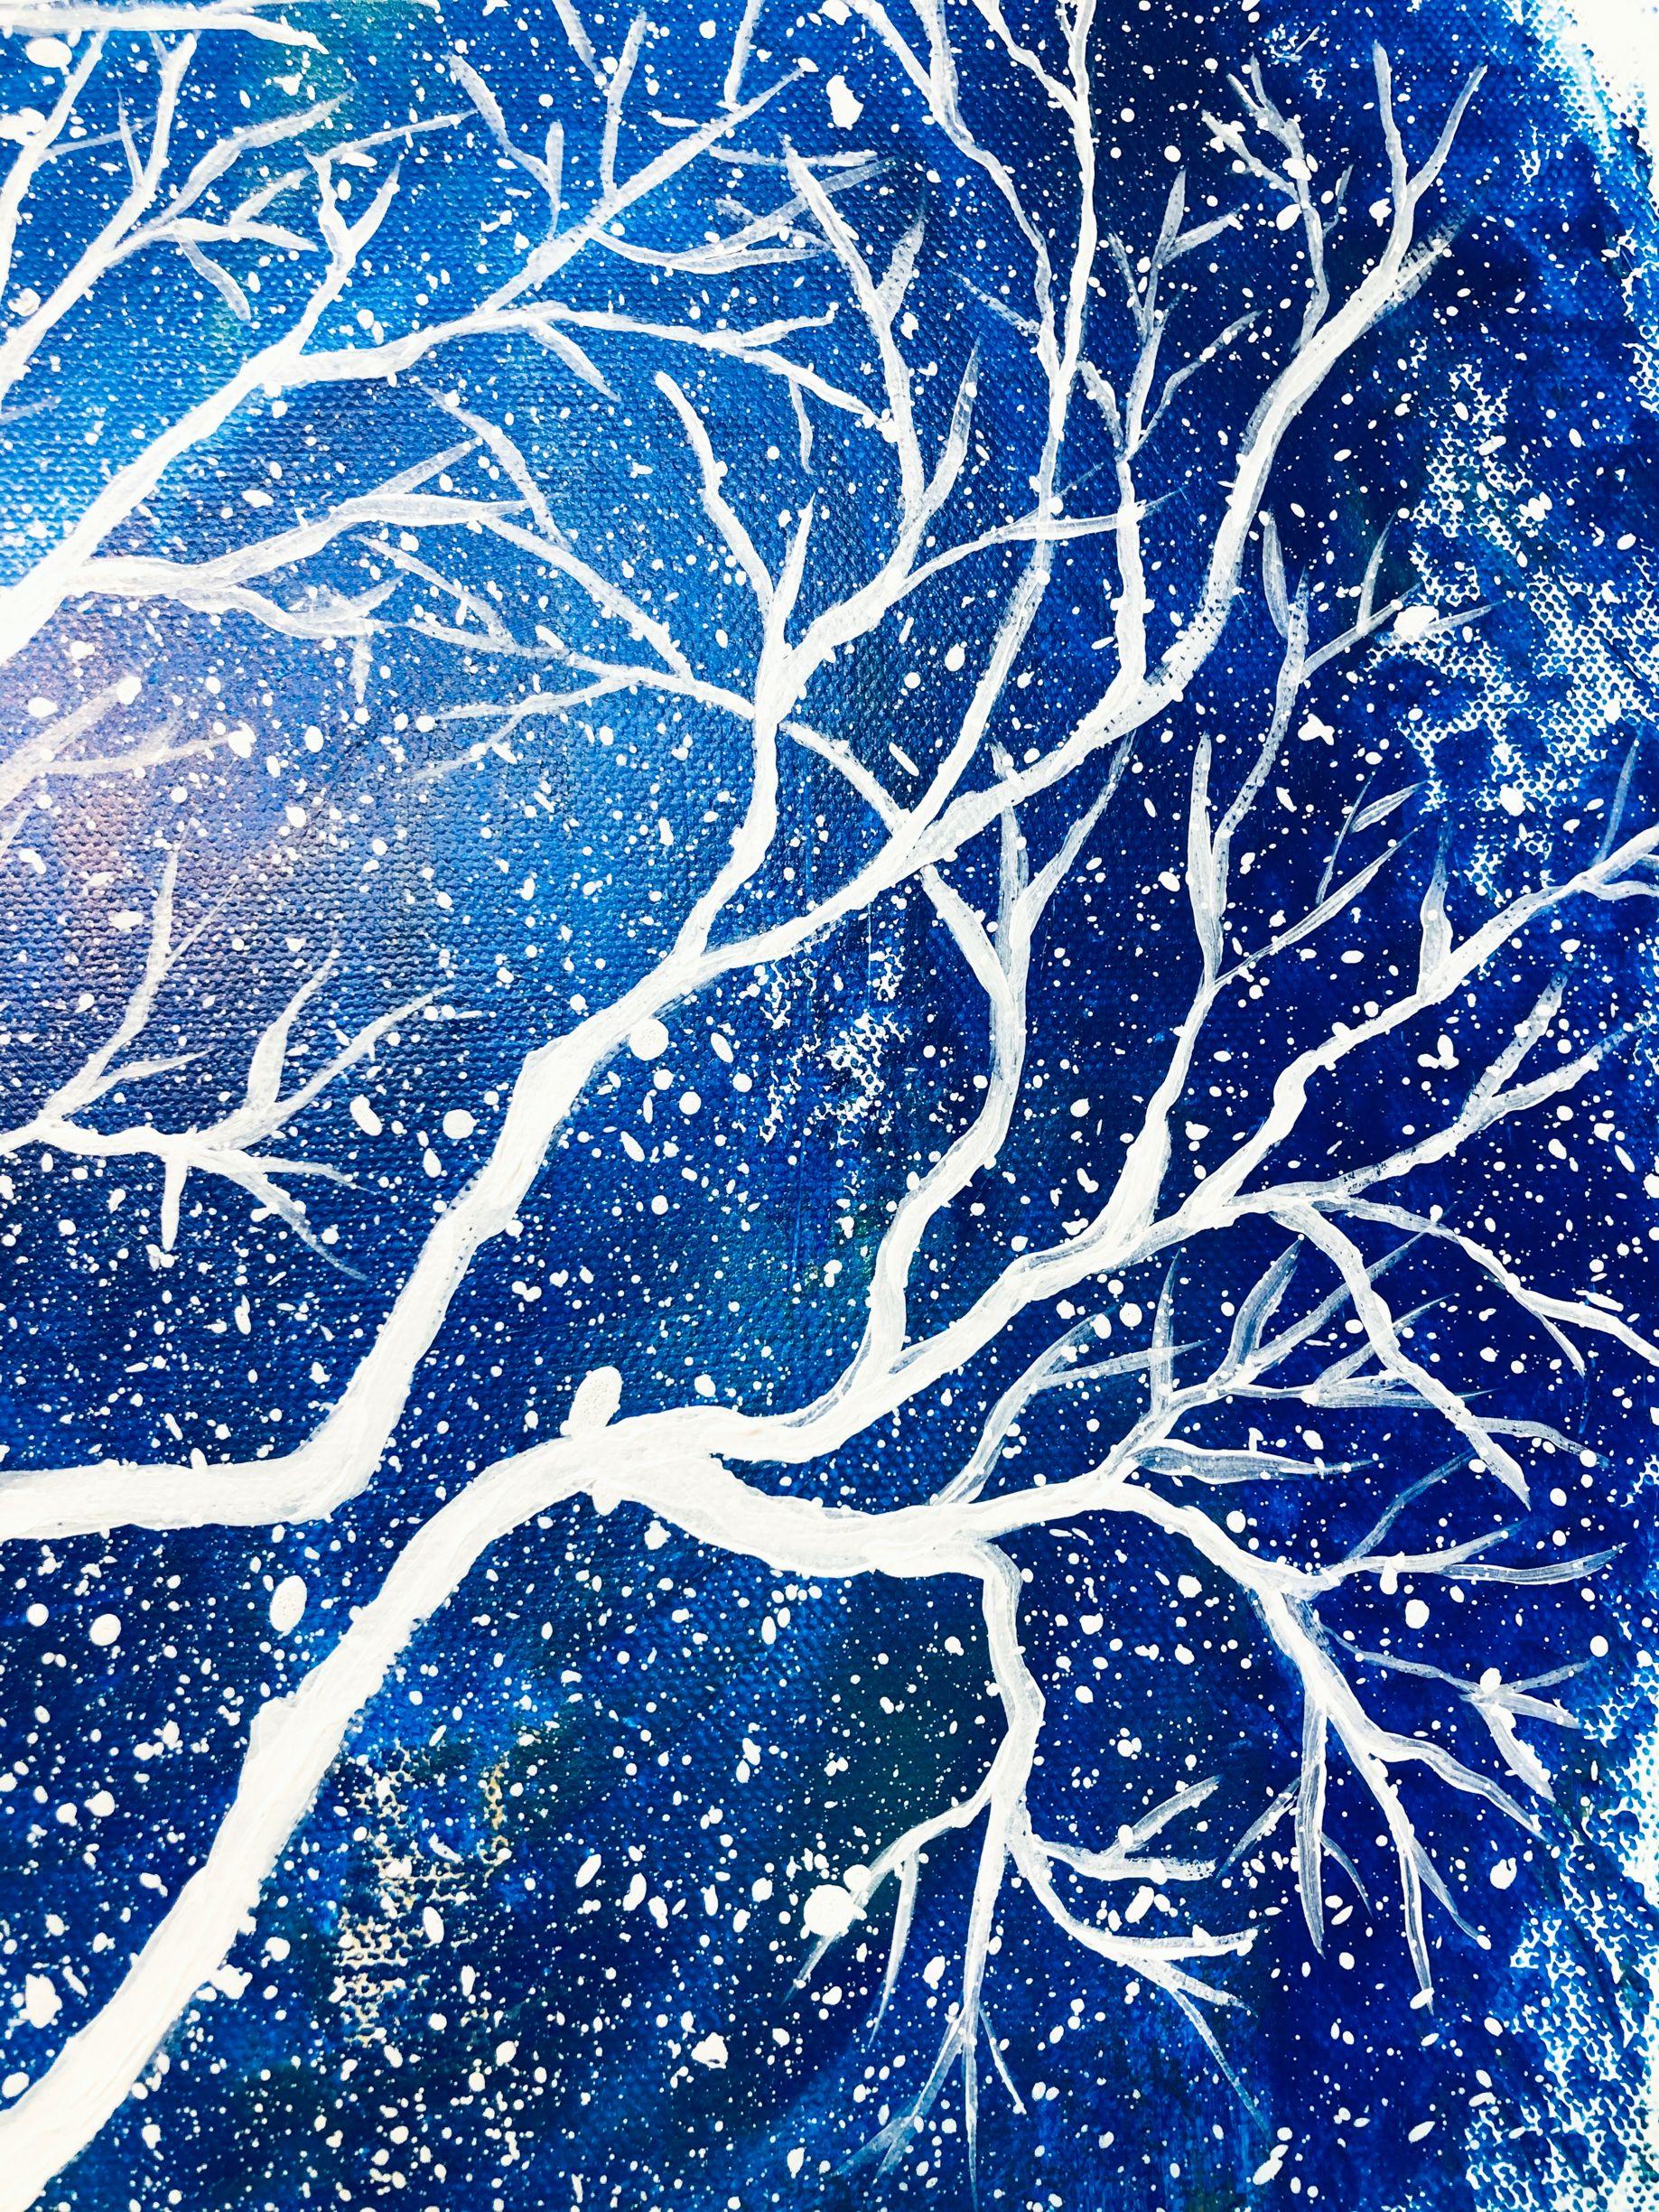 tree at night painting